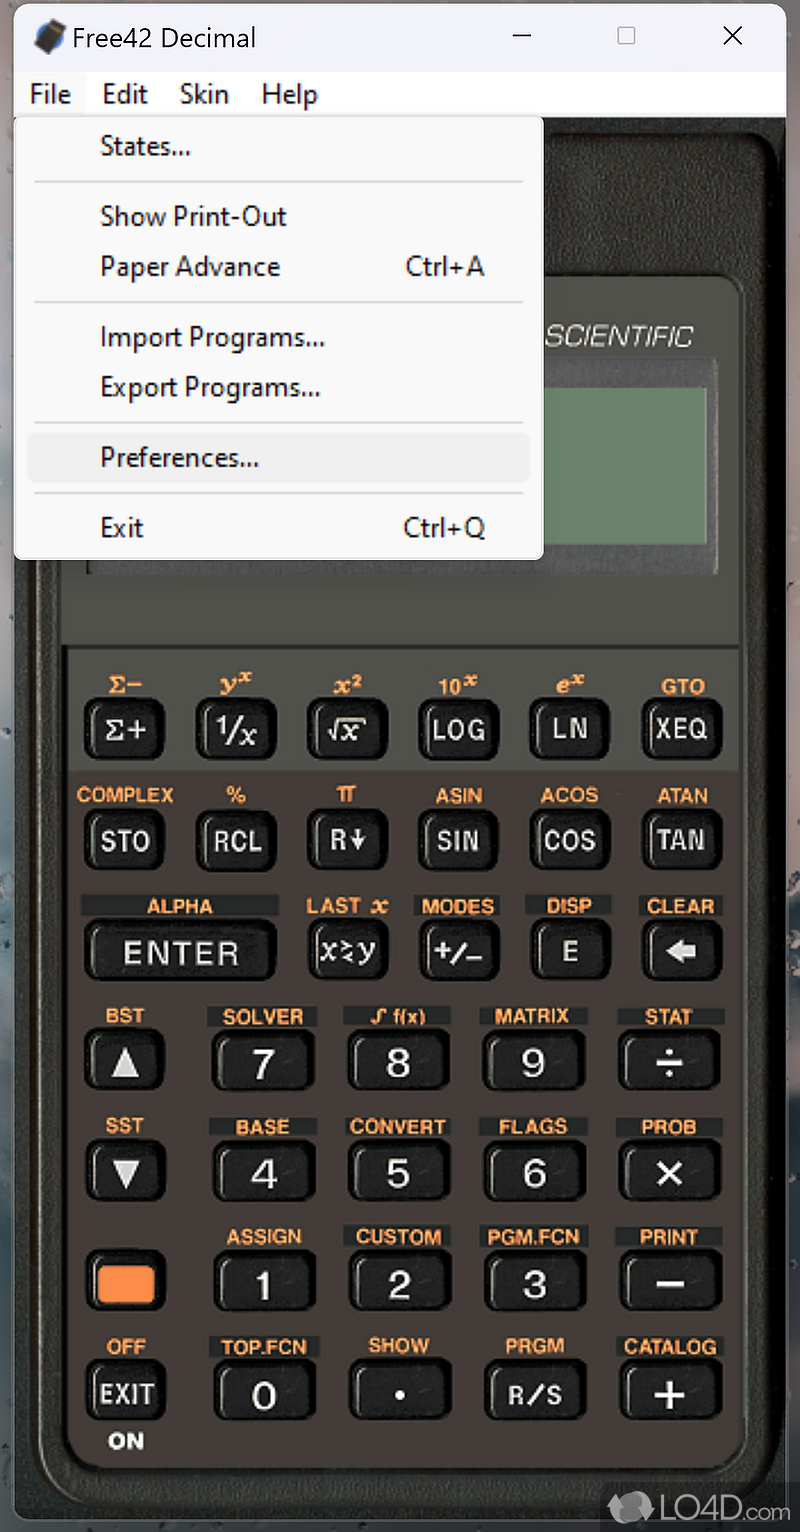 Includes a binary and decimal calculator - Screenshot of Free42